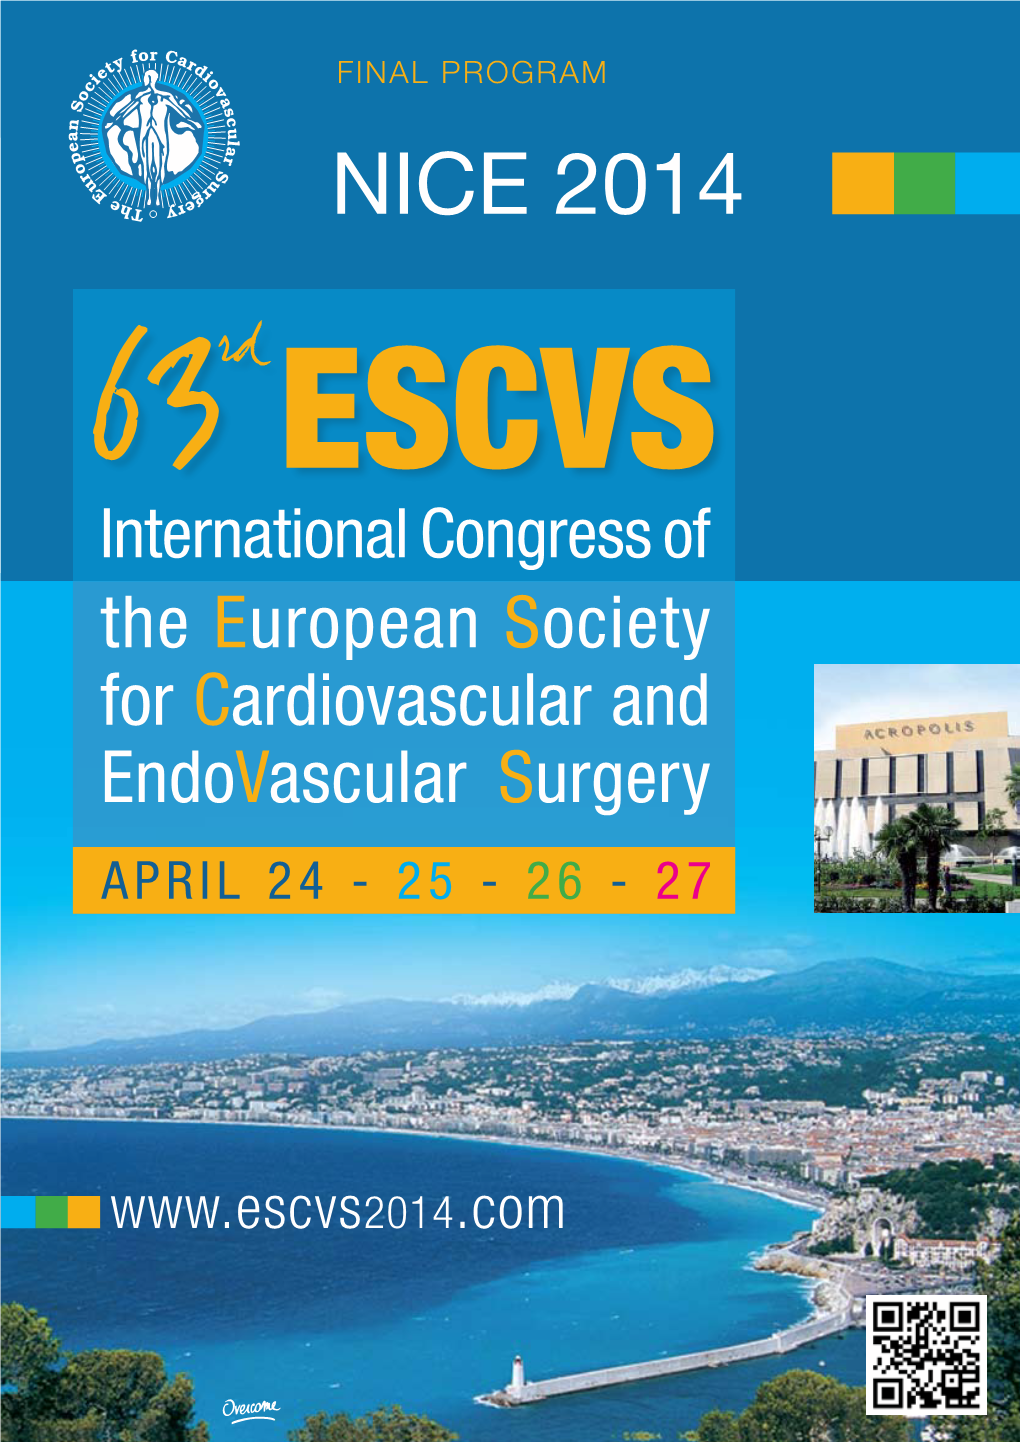 Nice 2014 Nice 2014 ESCVS International Congress of the European Society for Cardiovascular and Endovascular Surgery APRIL 24 - 25 - 26 - 27